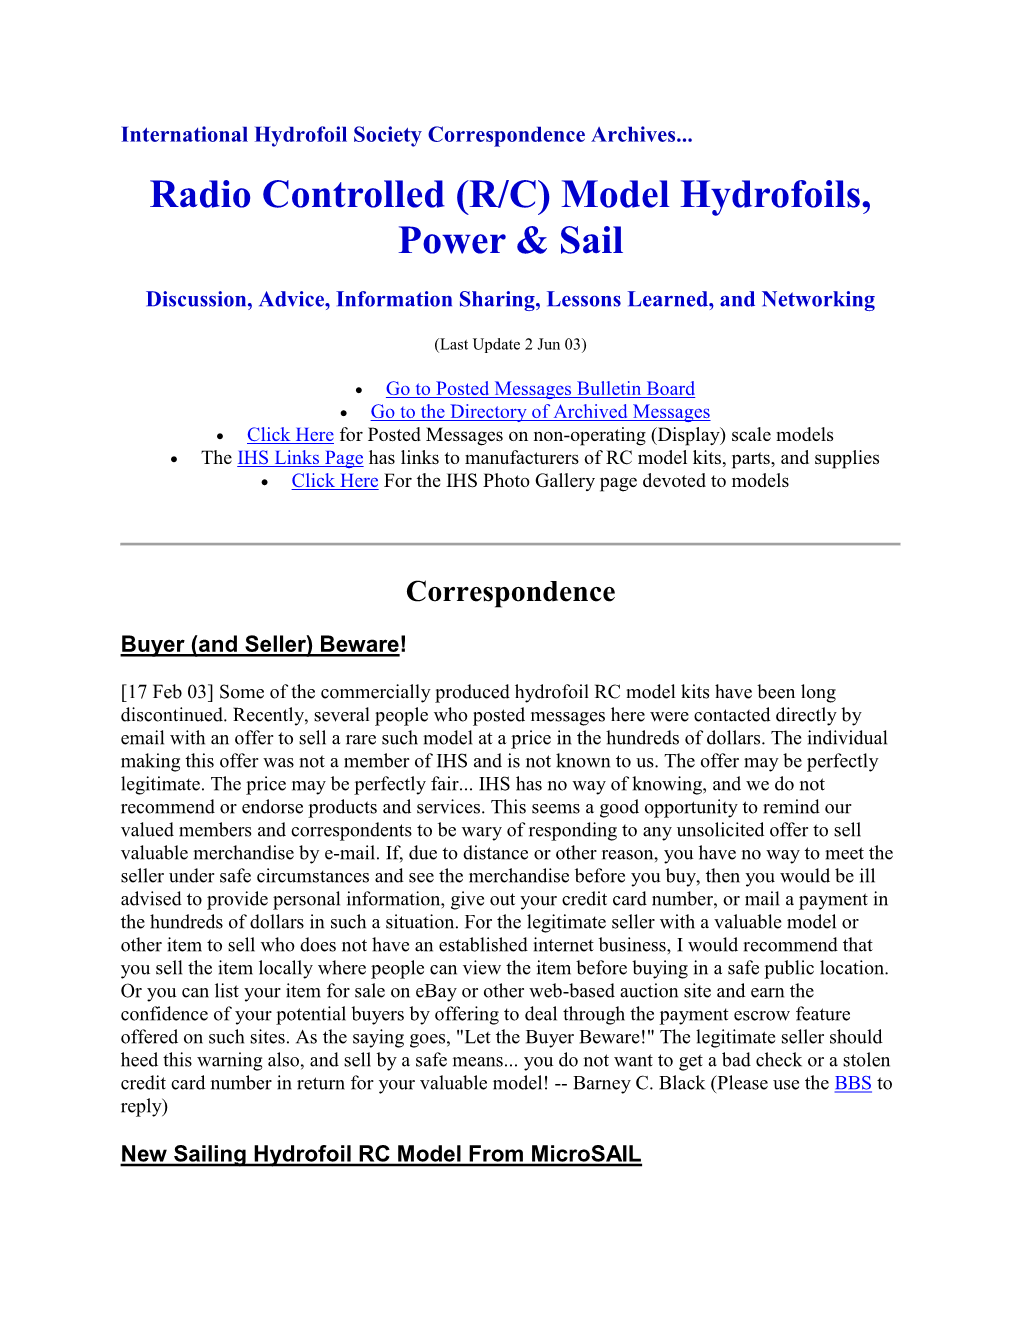 Radio Controlled (R/C) Model Hydrofoils, Power & Sail